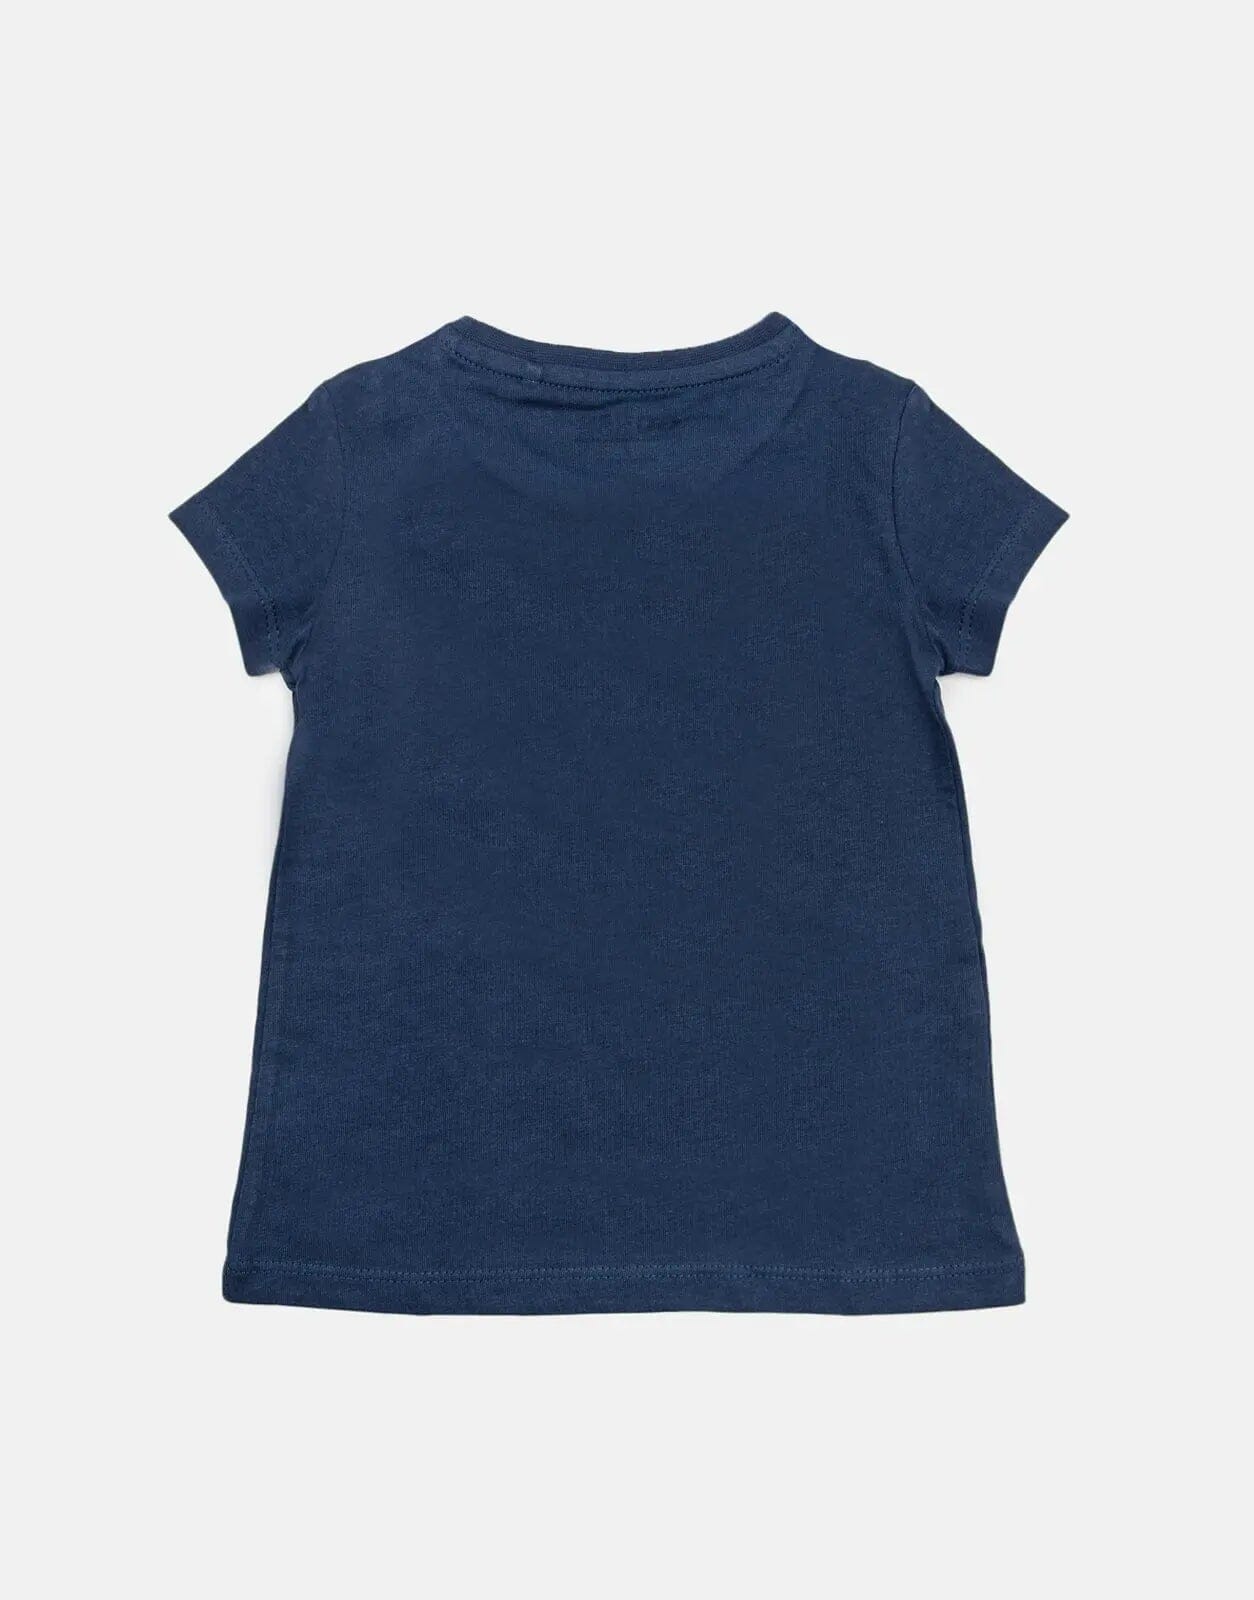 Guess Kids Core Blue T-Shirt - Subwear